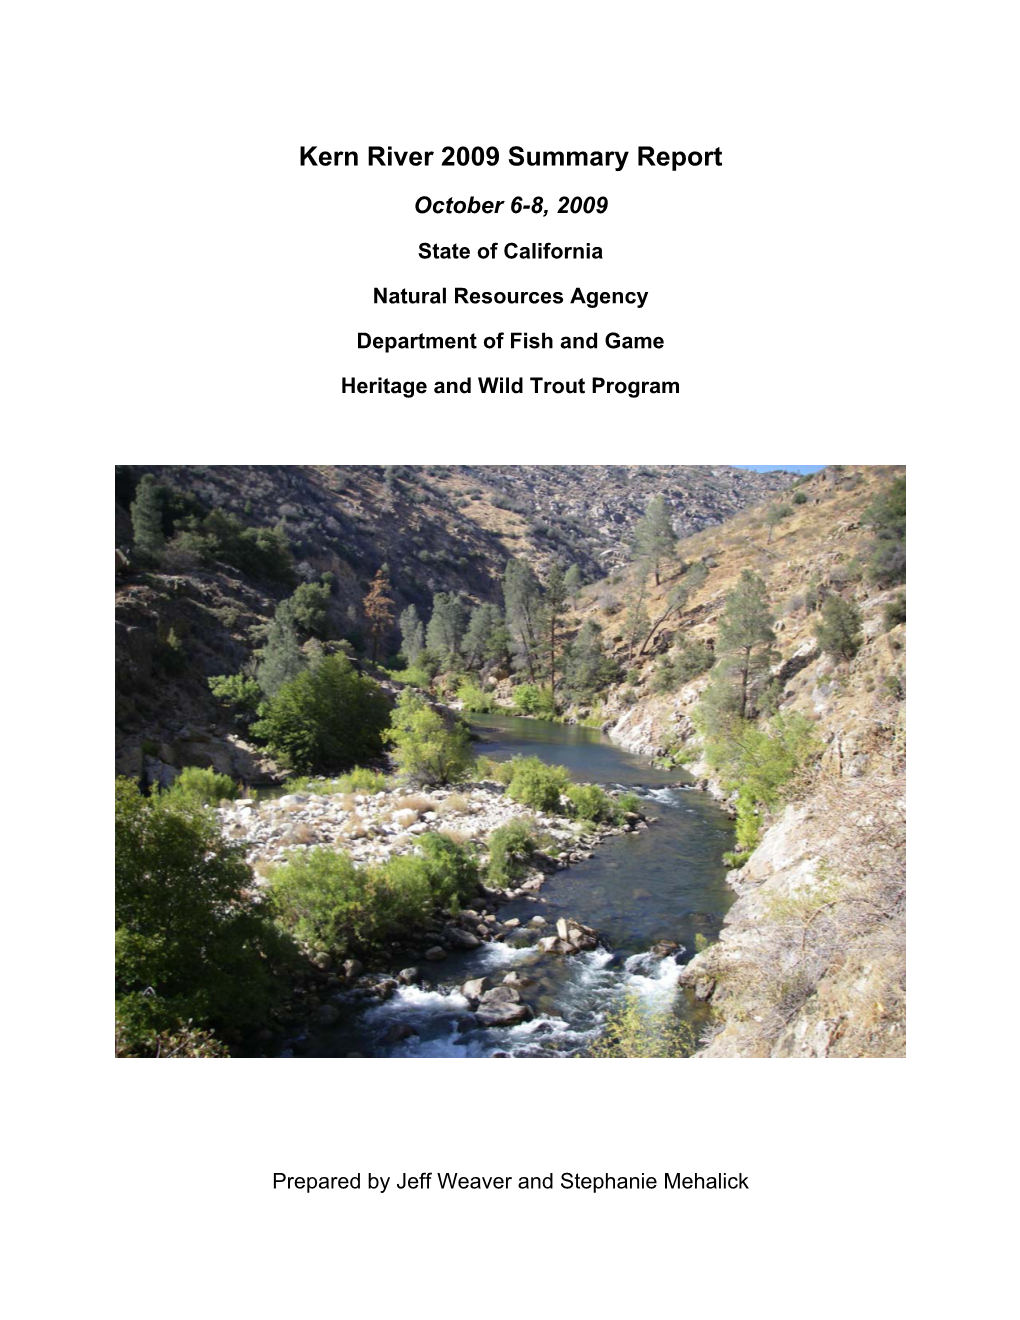 Kern River Summary Report 2009